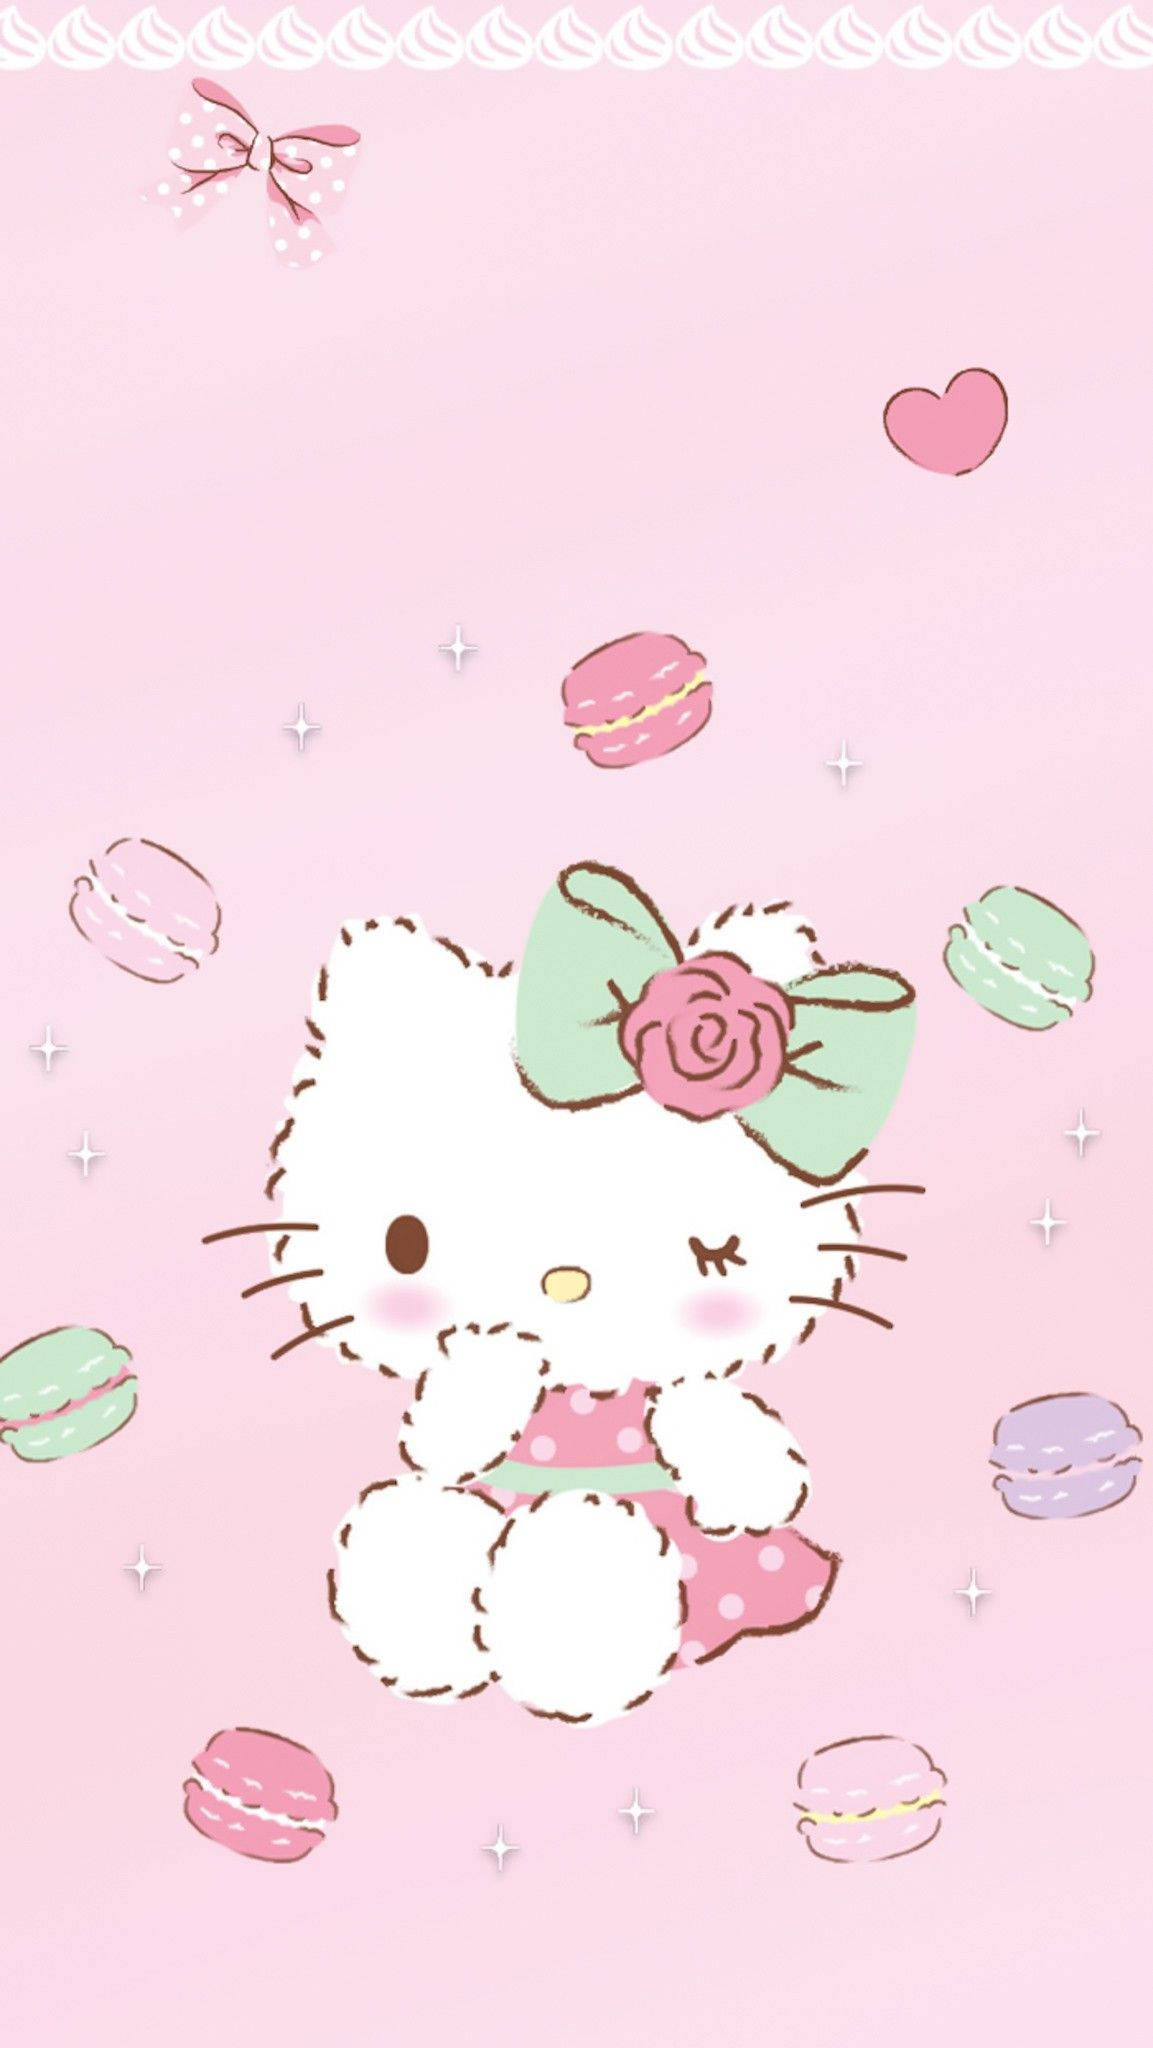 Free Hello Kitty Pfp Wallpaper Downloads, Hello Kitty Pfp Wallpaper for FREE